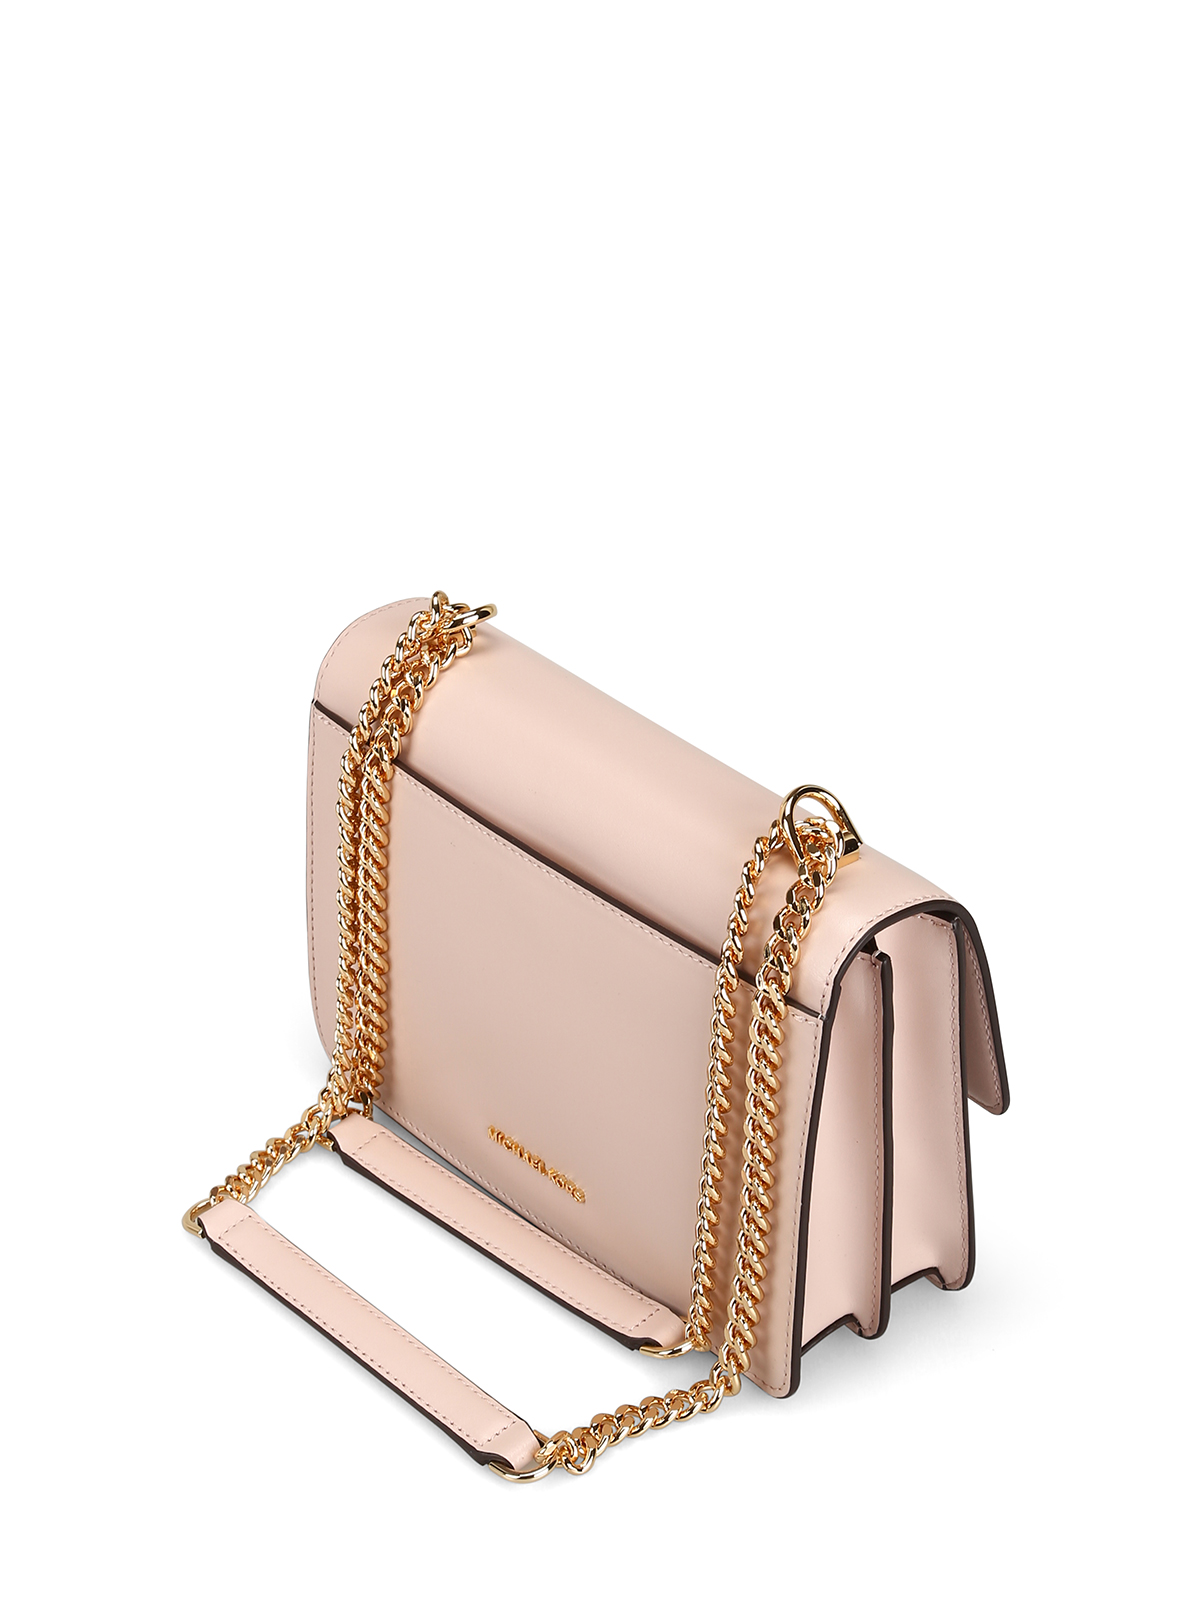 Michael Kors Jade Large Gusset Shoulder Ballet Multi One Size Handbags  Amazoncom